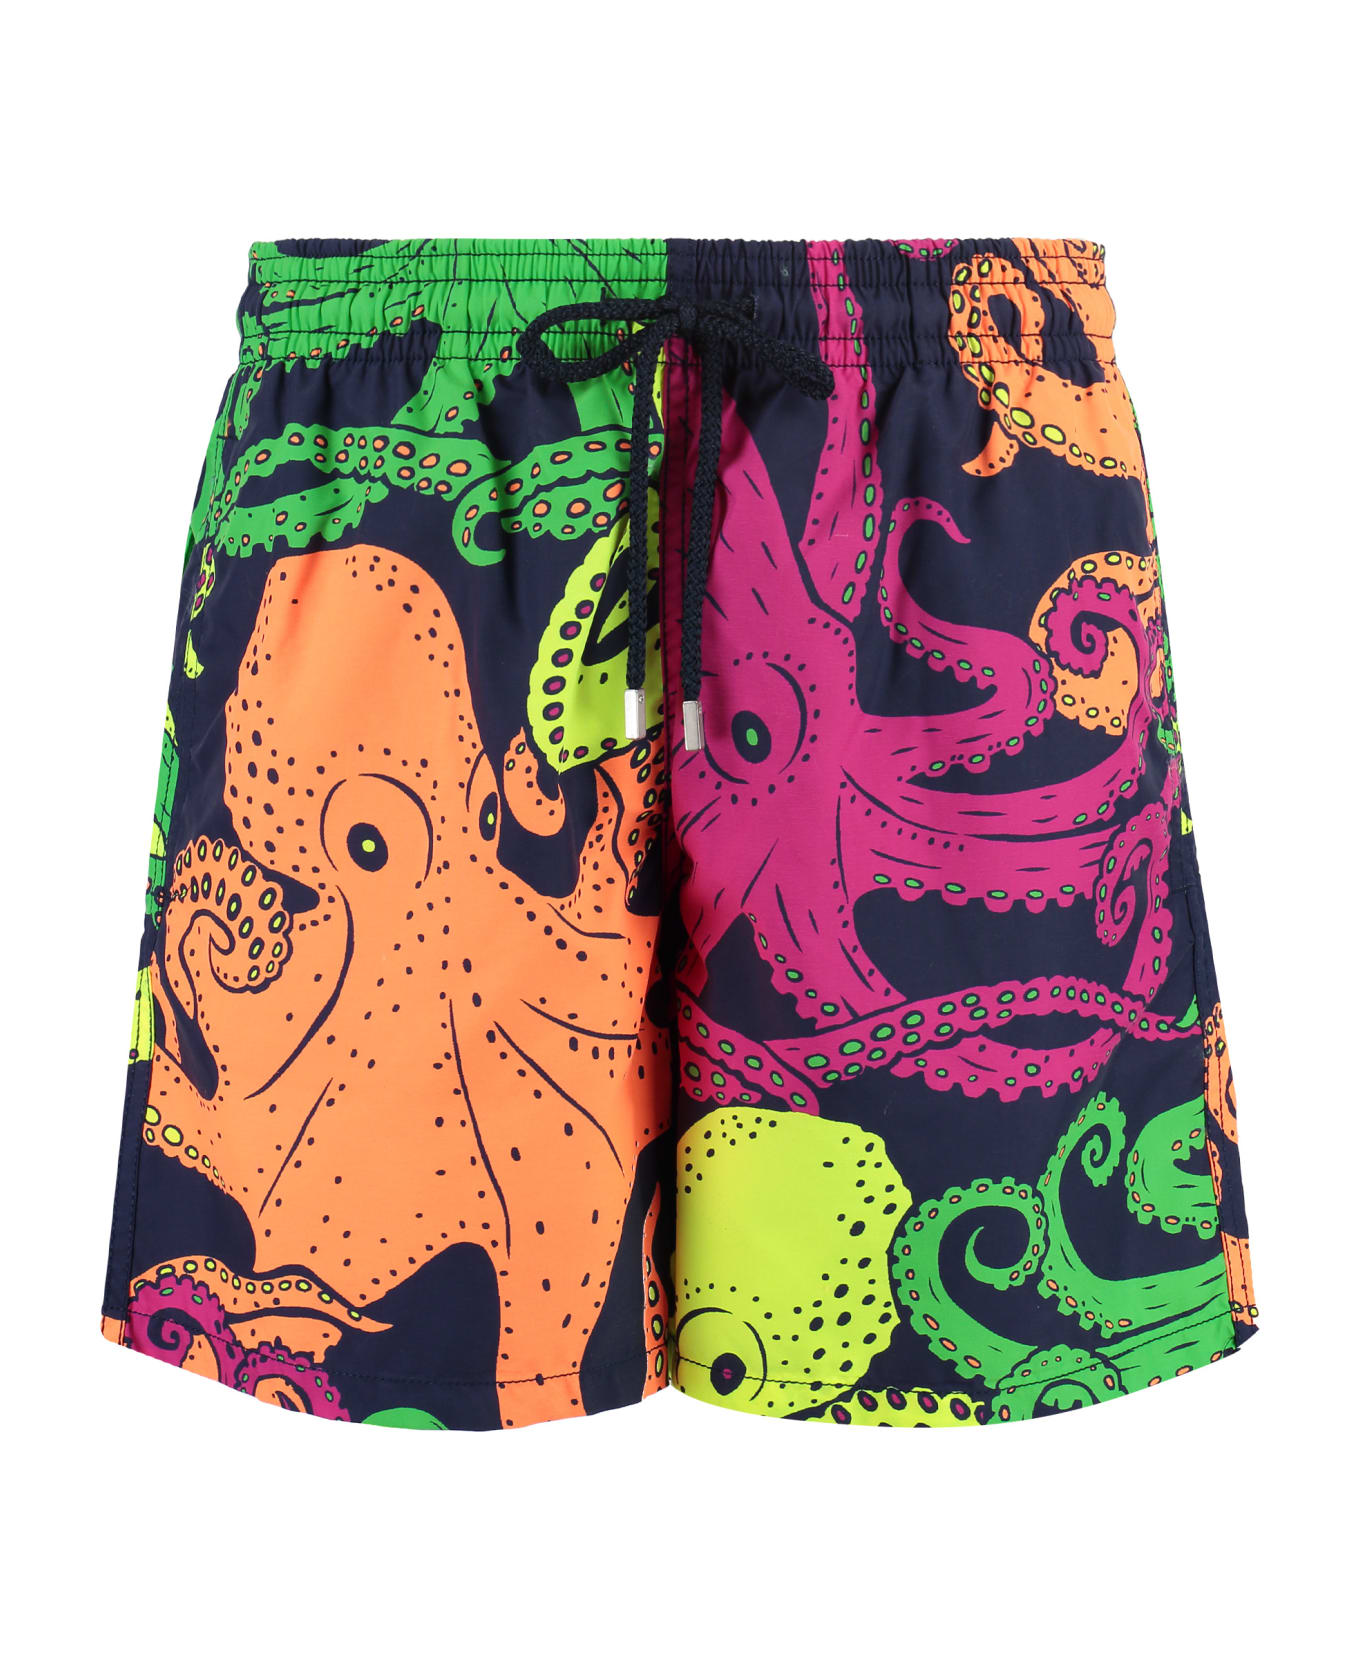 Vilebrequin Moorea Swim Shorts - Multicolor